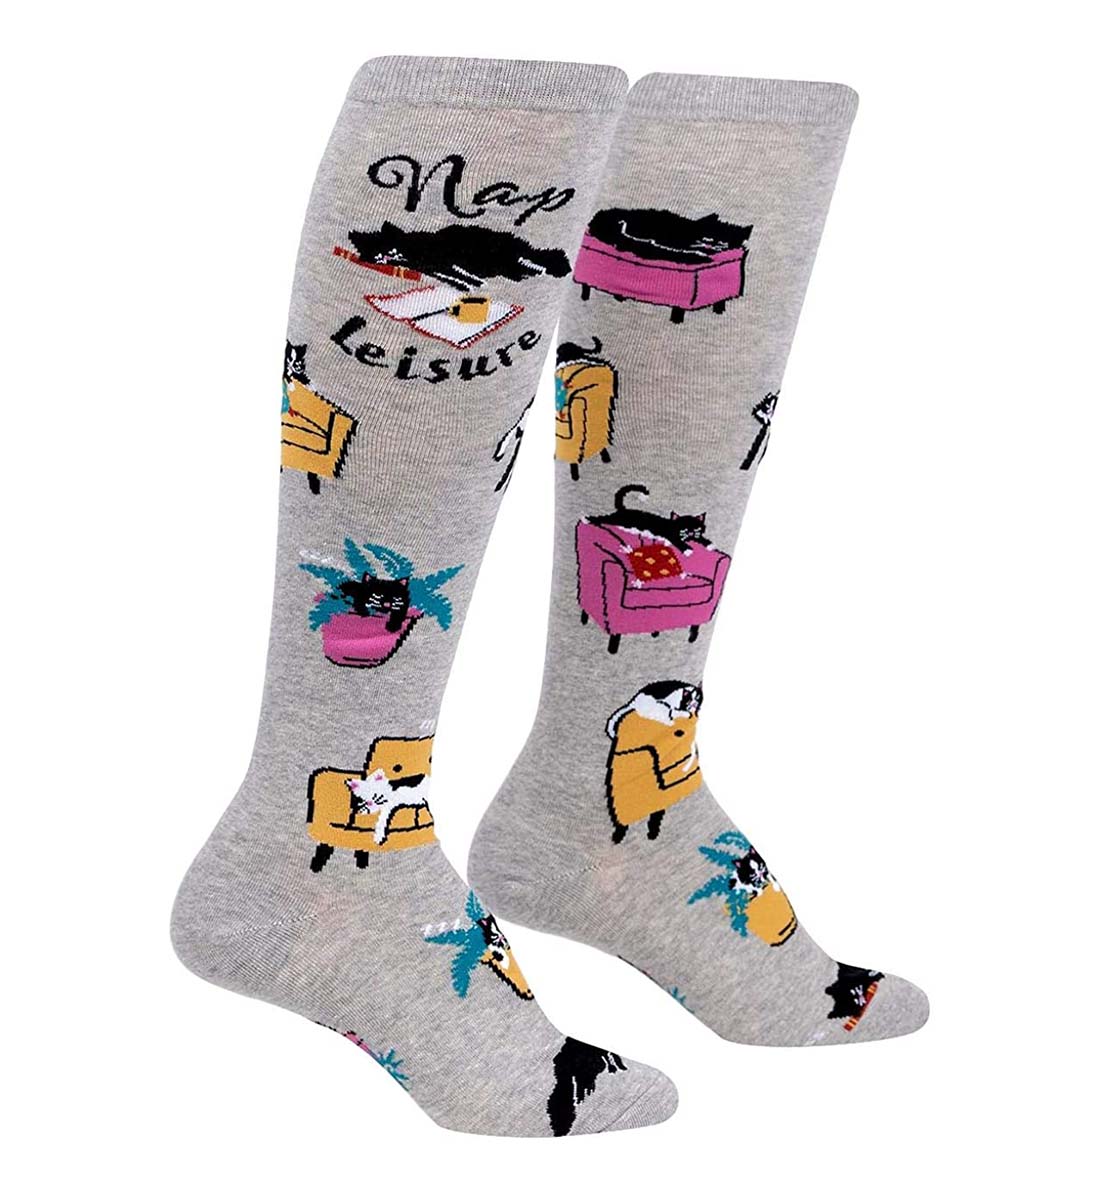 SOCK it to me Unisex Knee High Socks (f0516), Nap Leisure - Nap Leisure,One Size